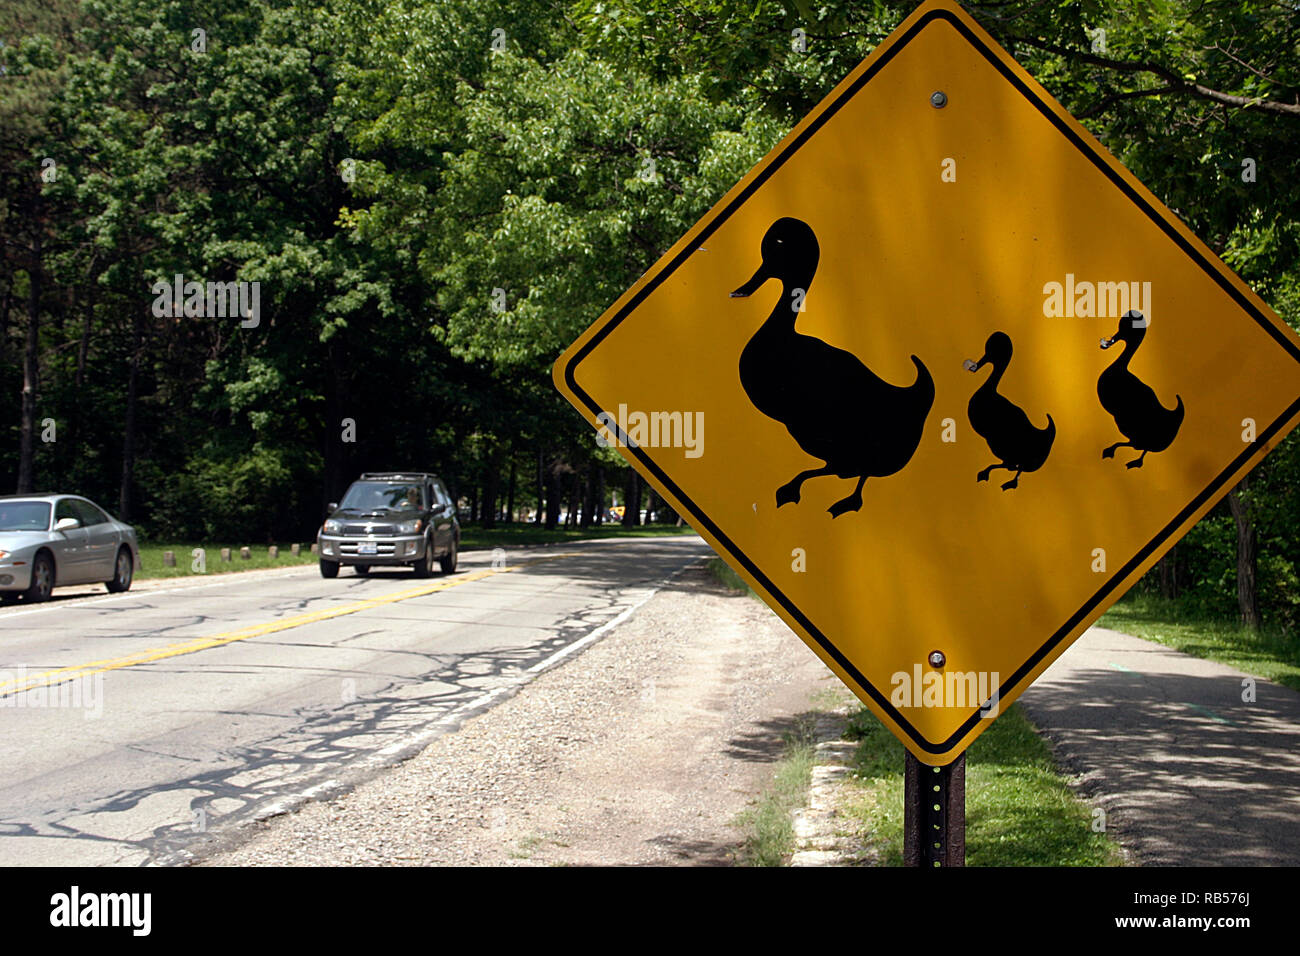 Ducks crossing road sign Stock Photo